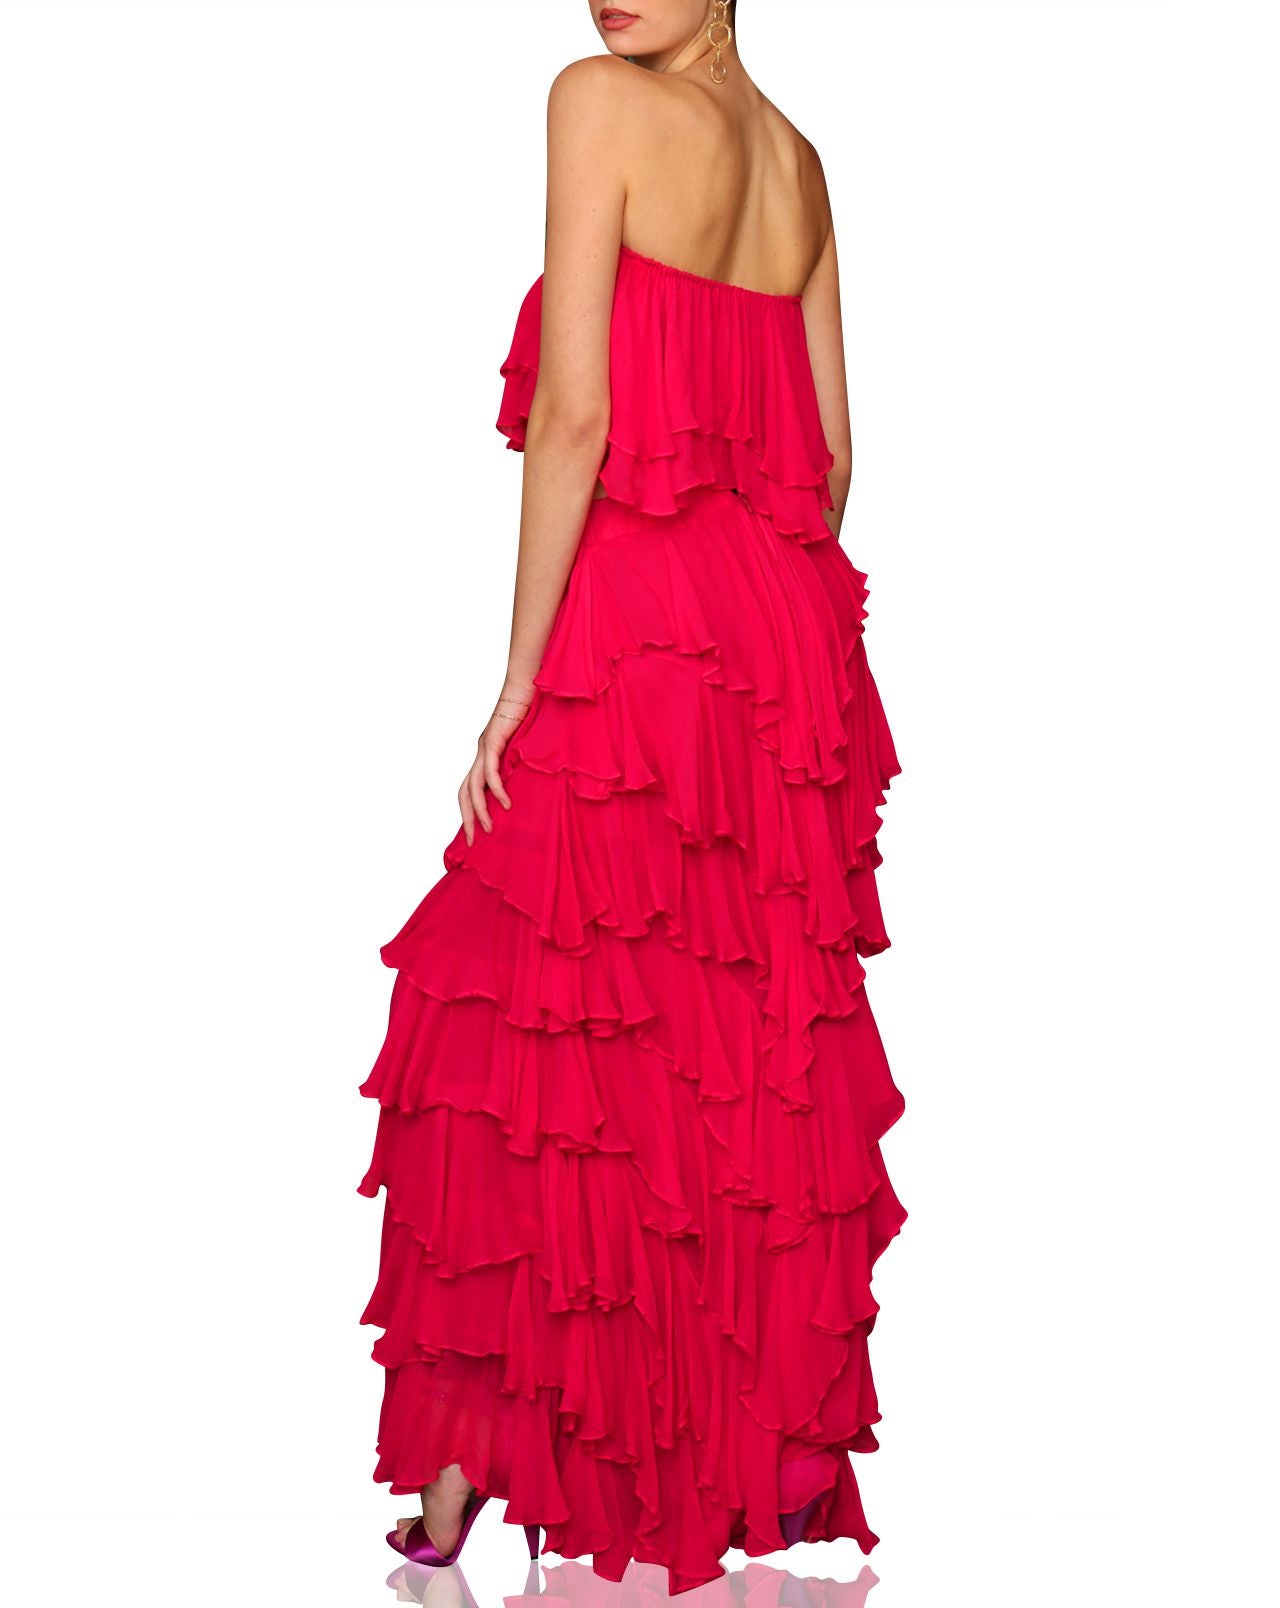 Off The Shoulder Dress: Ruffle Dress - Women's Designer Off The ...